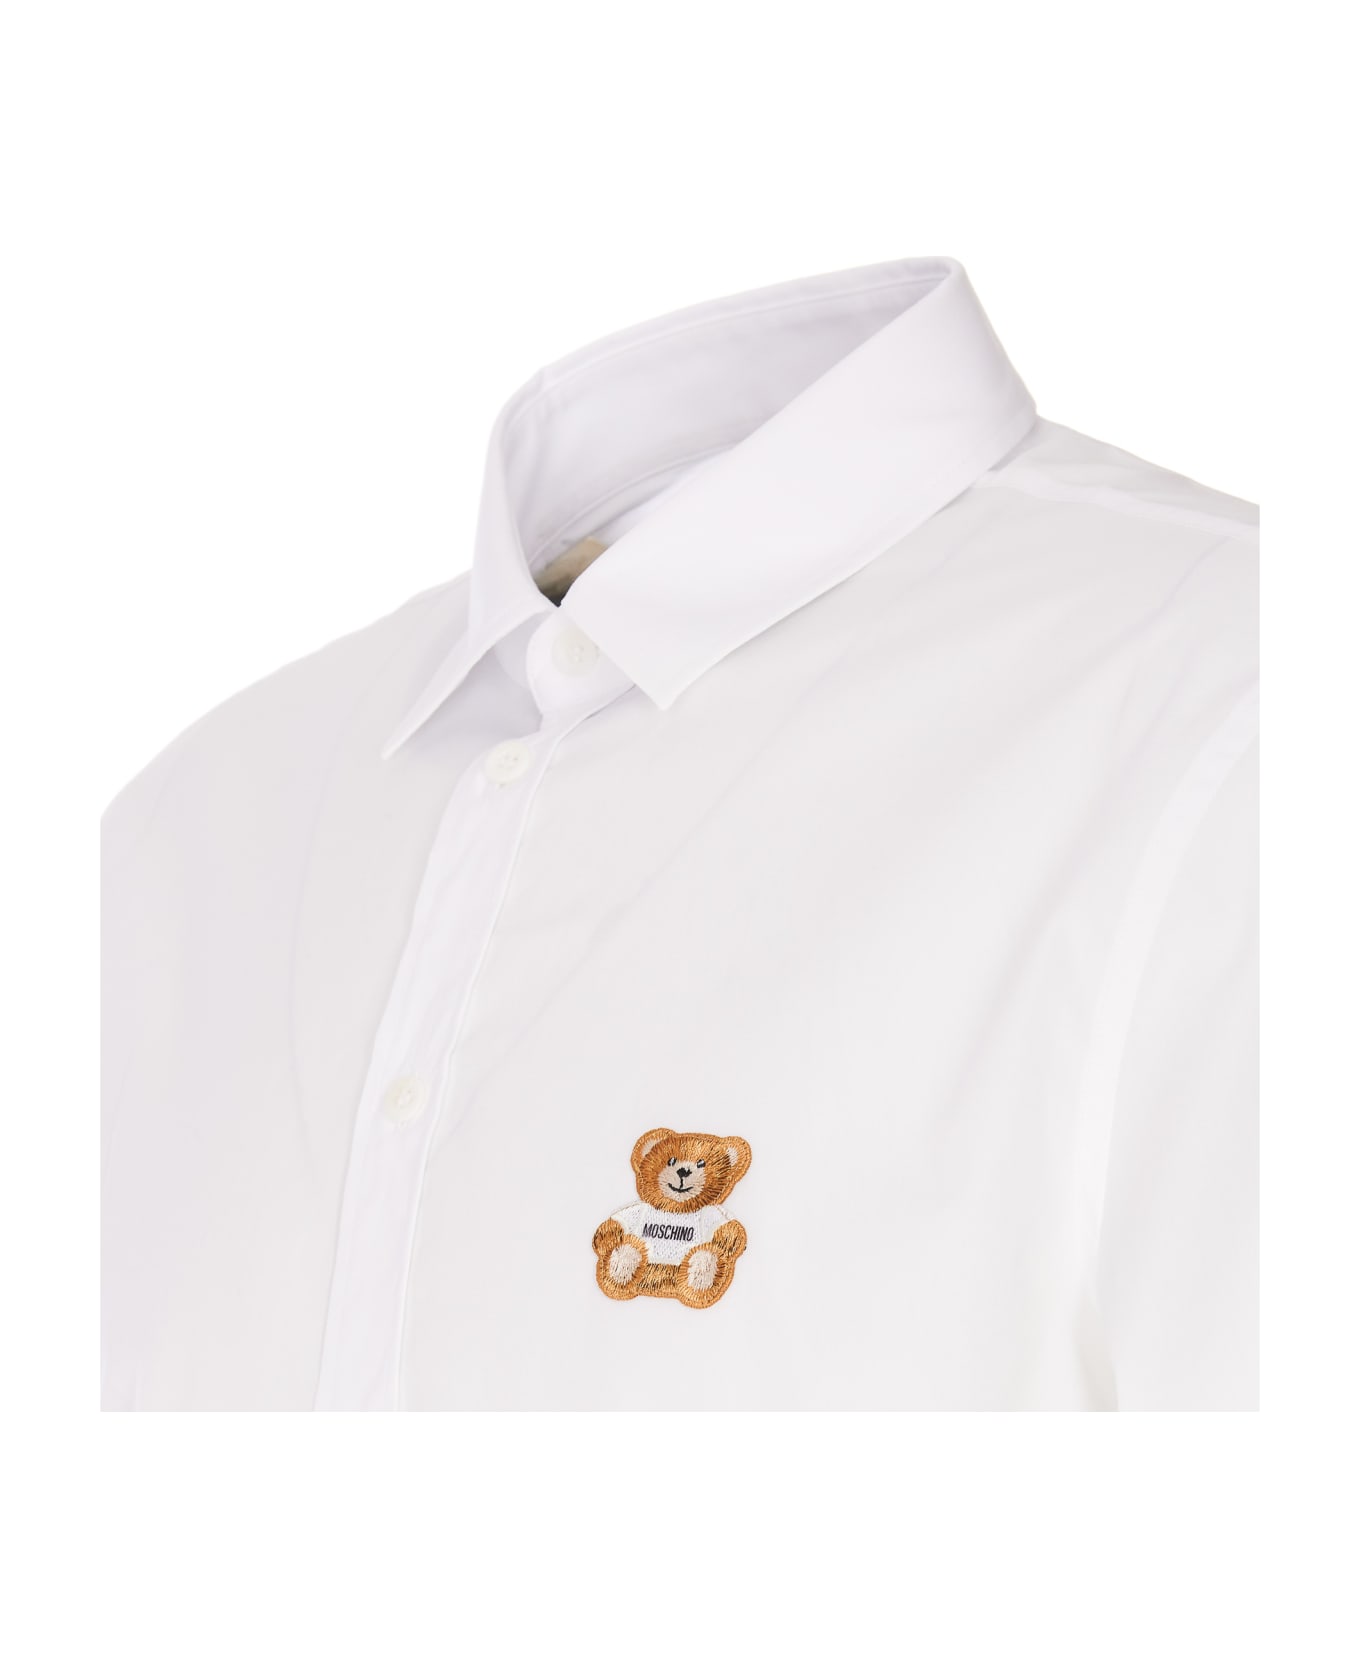 Moschino Teddy Bear Logo Shirt - White